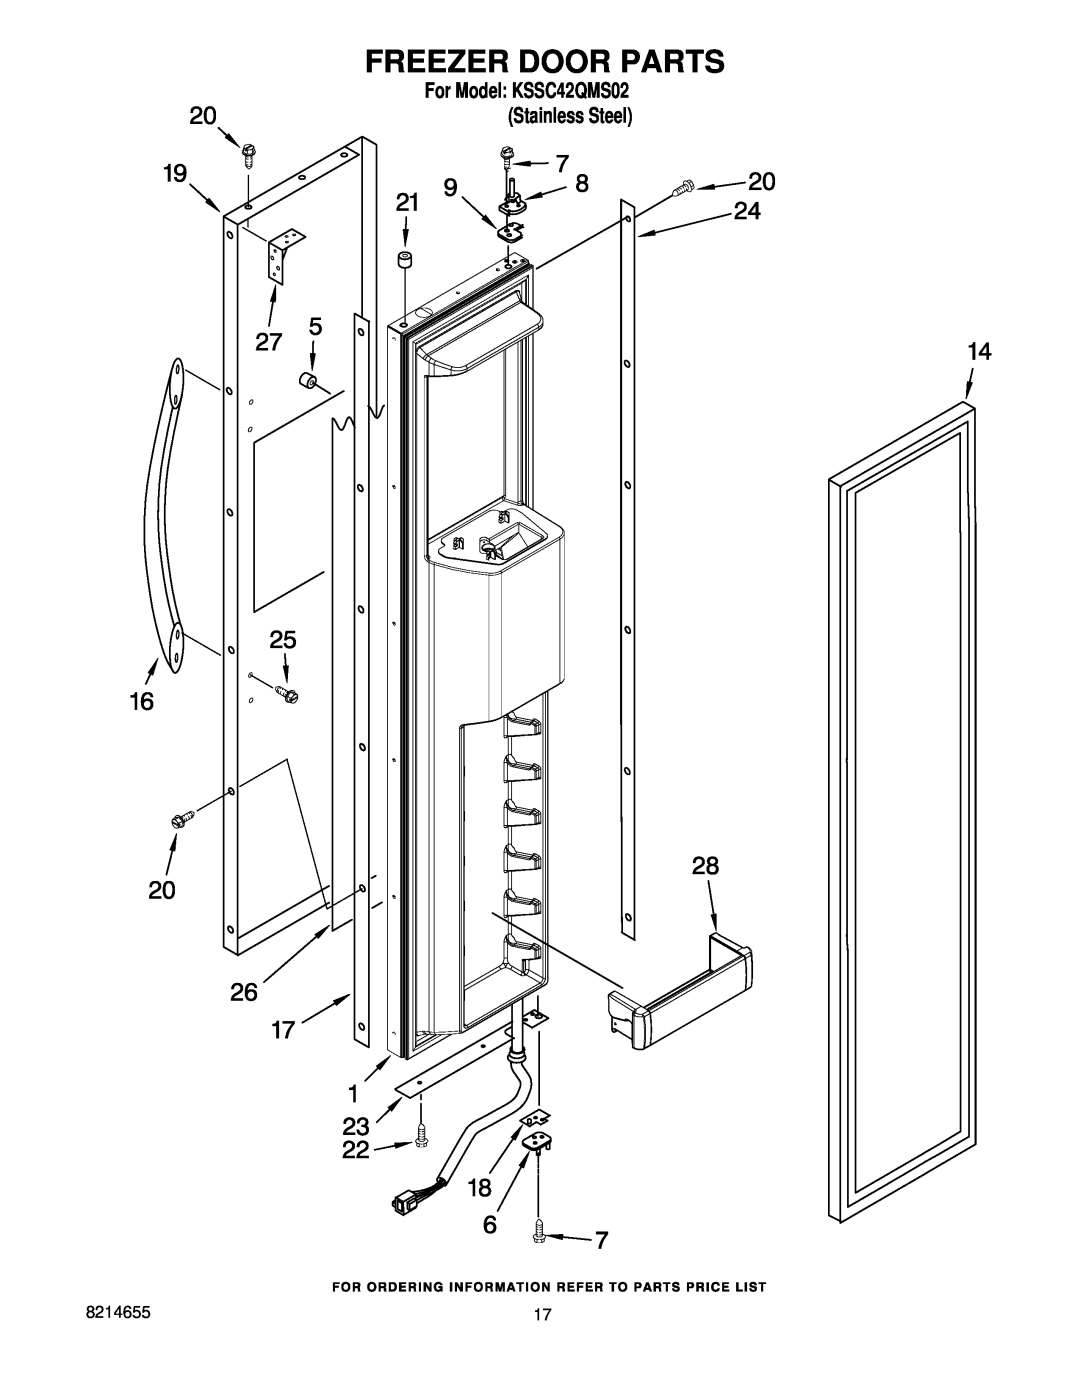 KitchenAid manual Freezer Door Parts, For Model KSSC42QMS02 Stainless Steel 